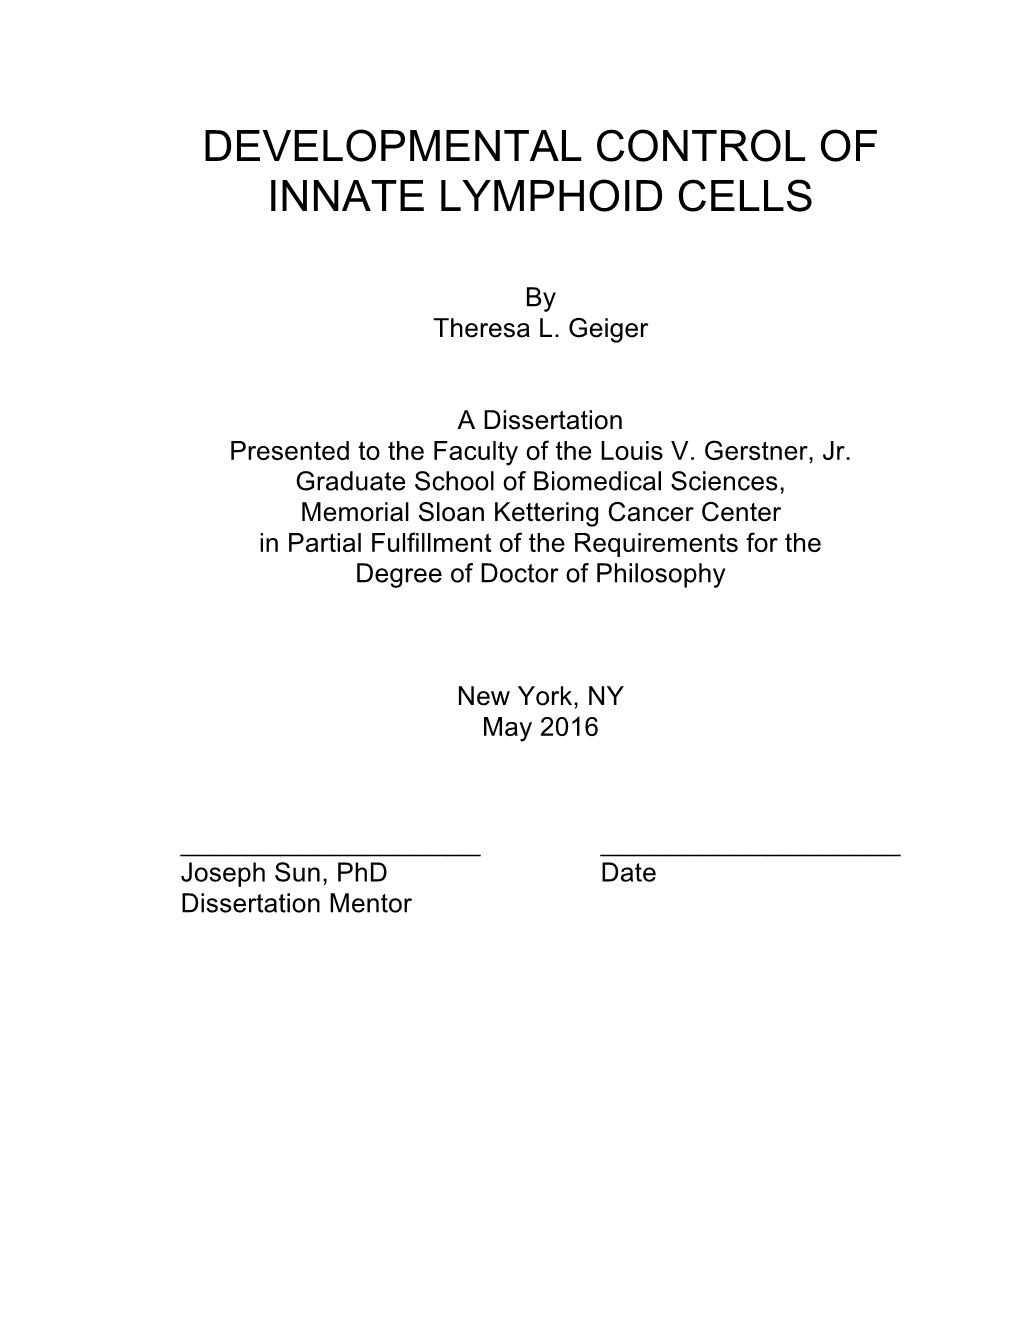 Developmental Control of Innate Lymphoid Cells